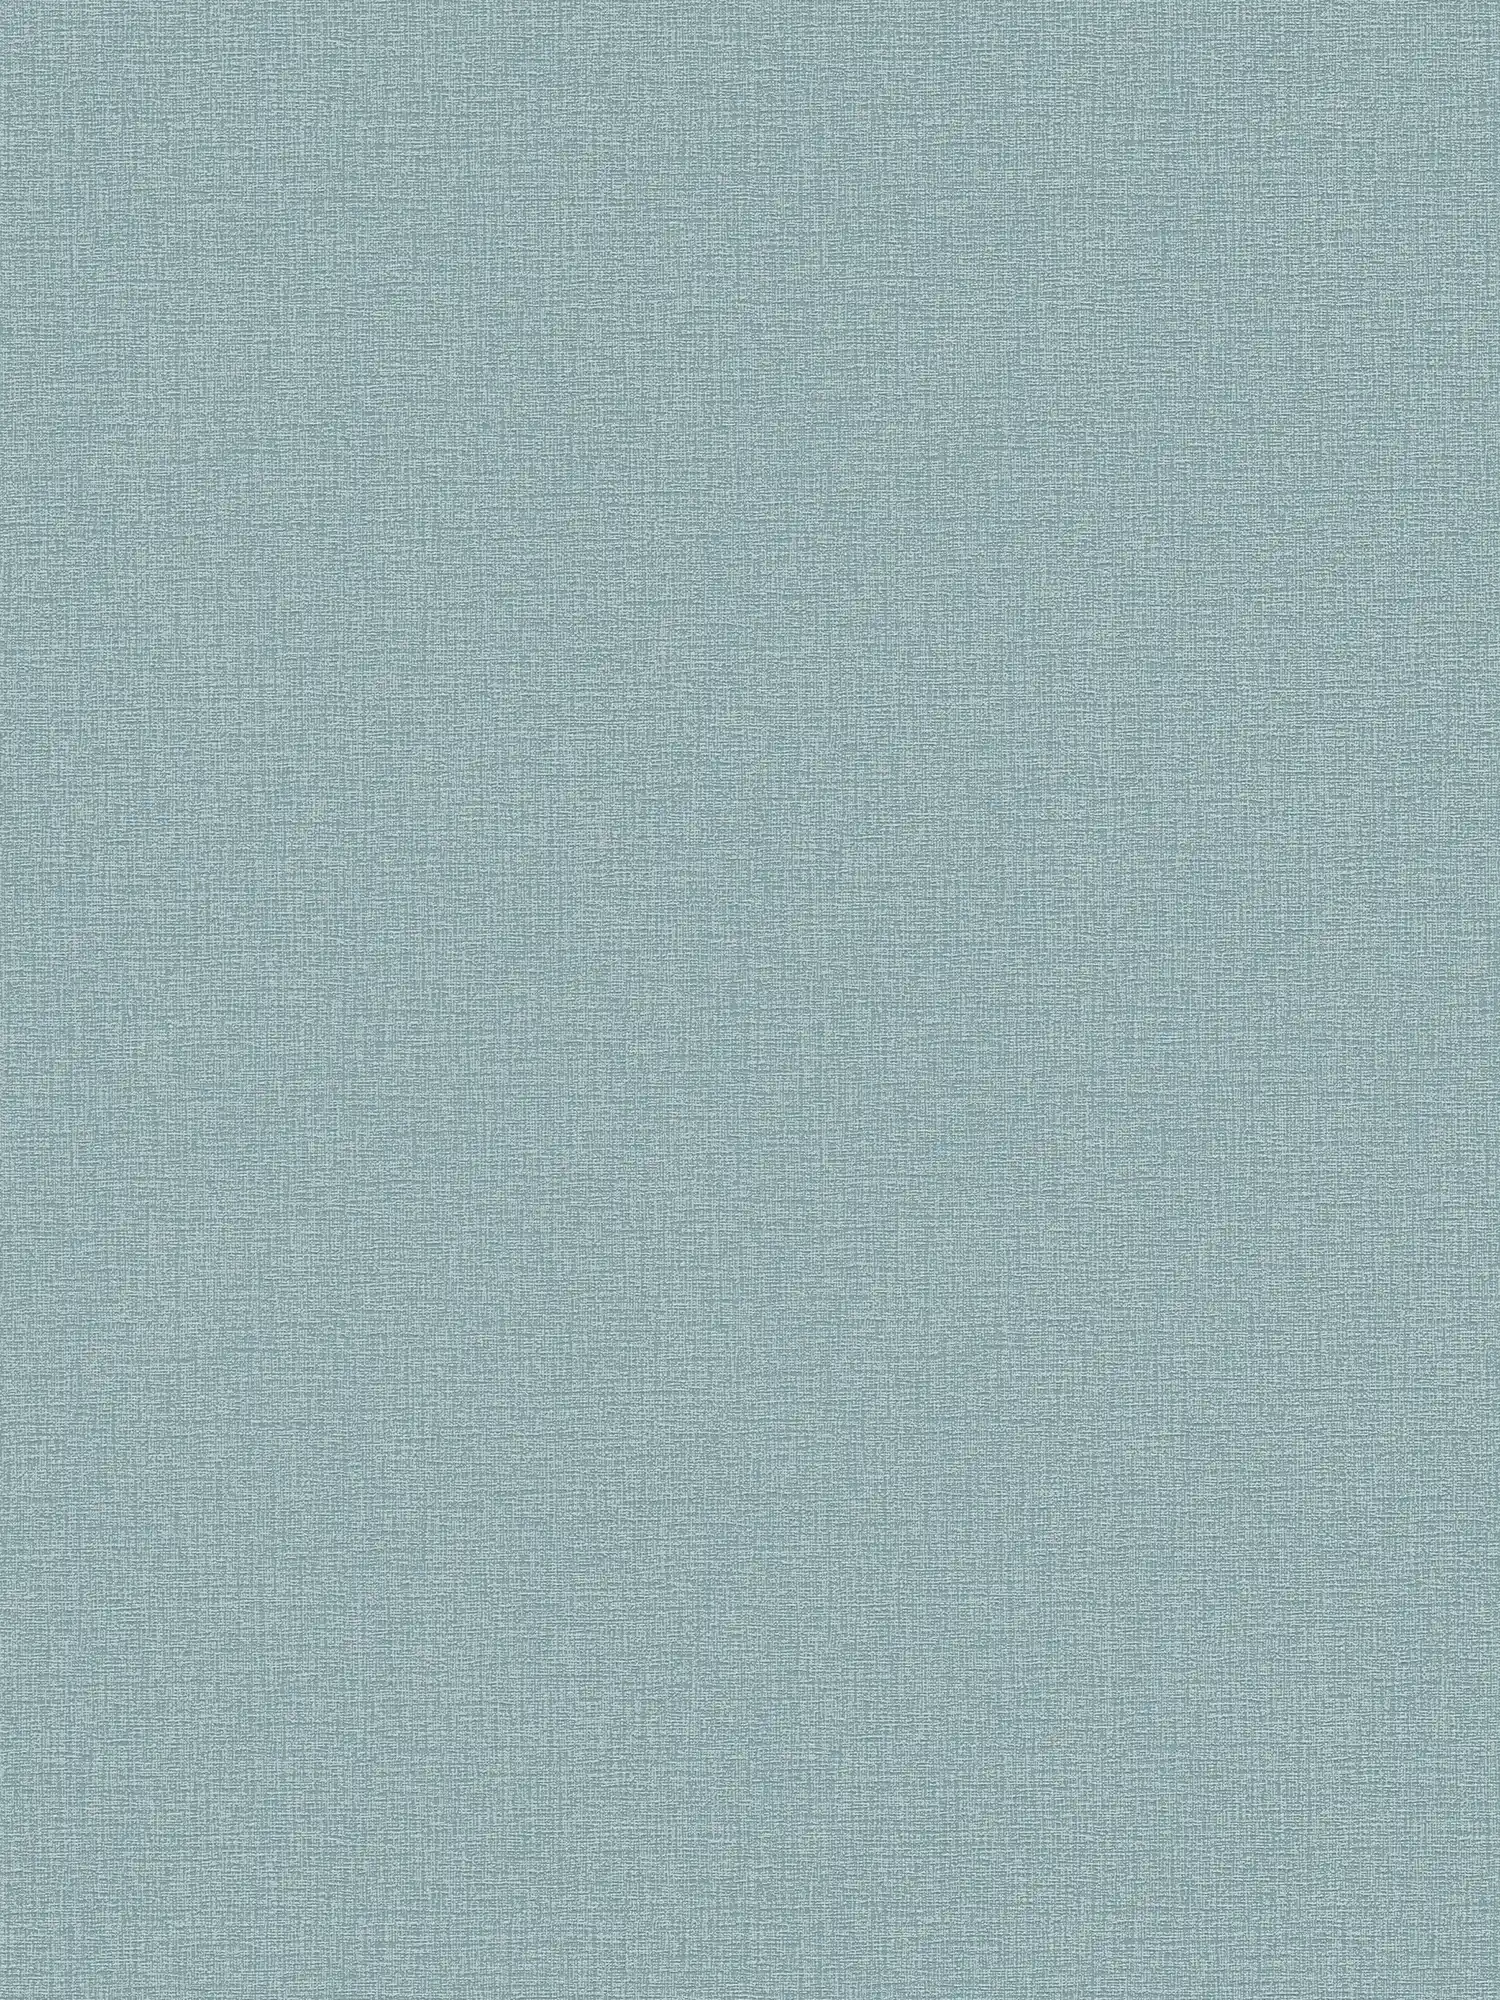 Lightly textured plain wallpaper - blue, turquoise, petrol
